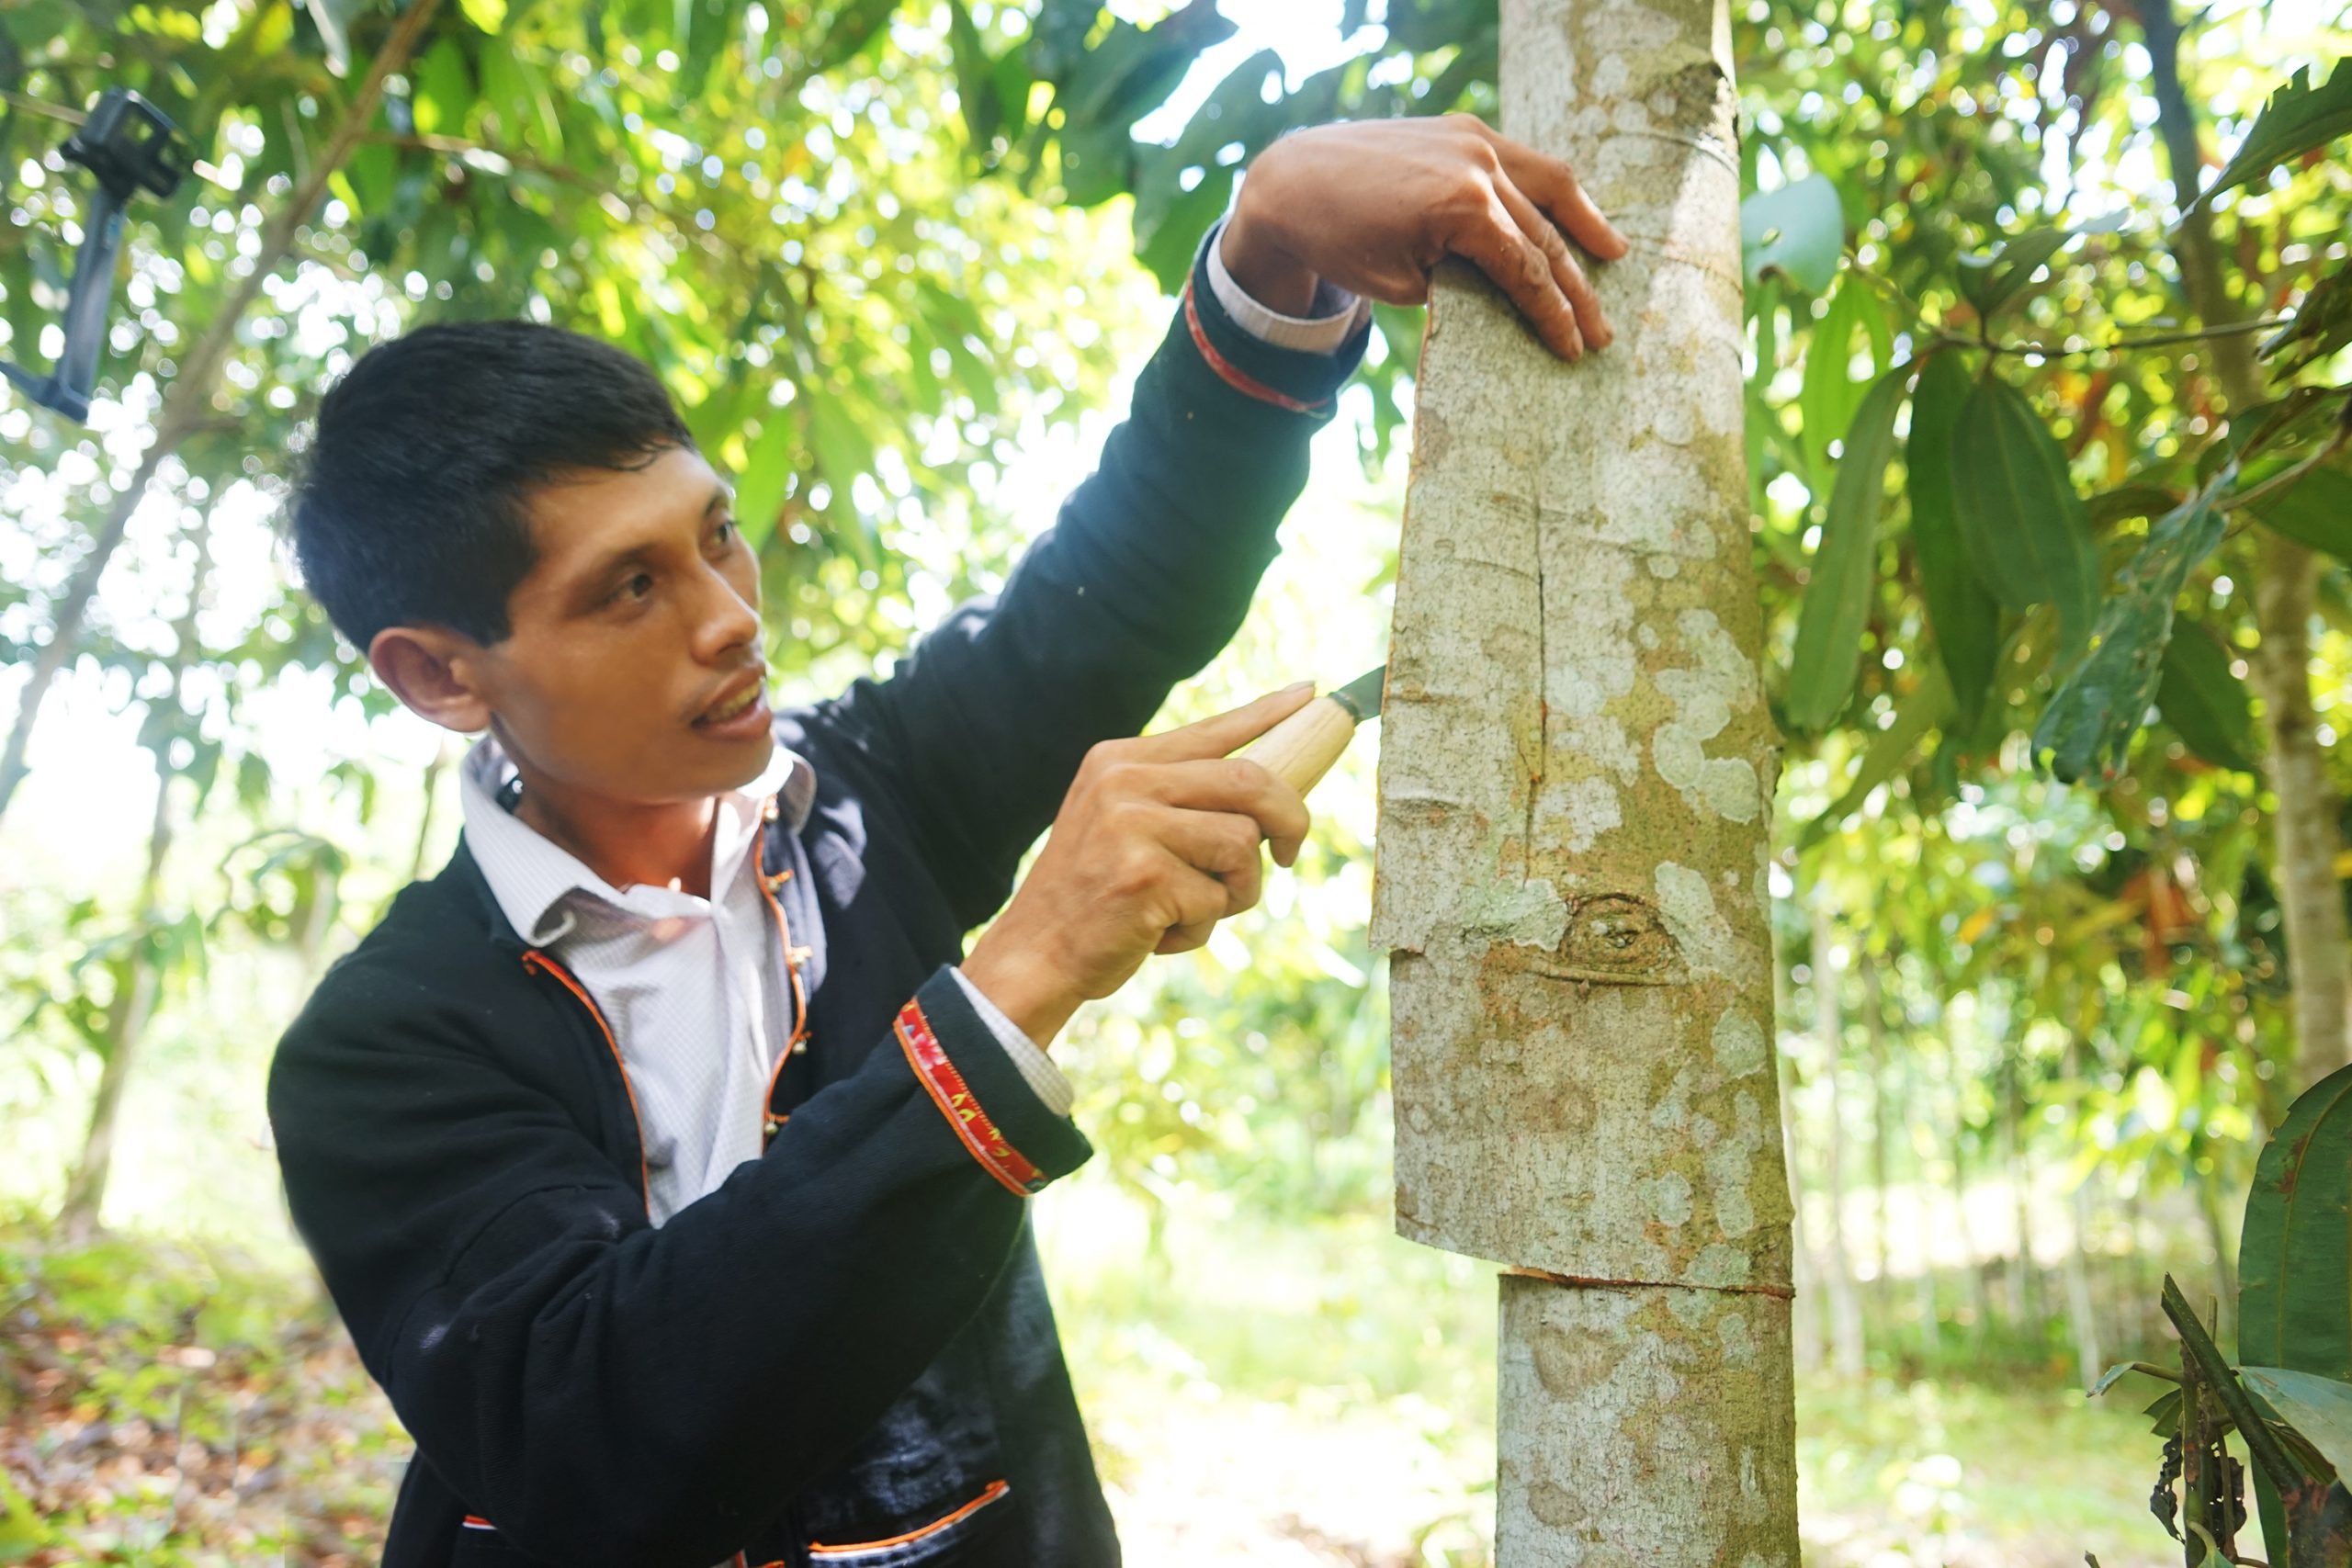 Organic Cinnamon farming success story in Yen Bai